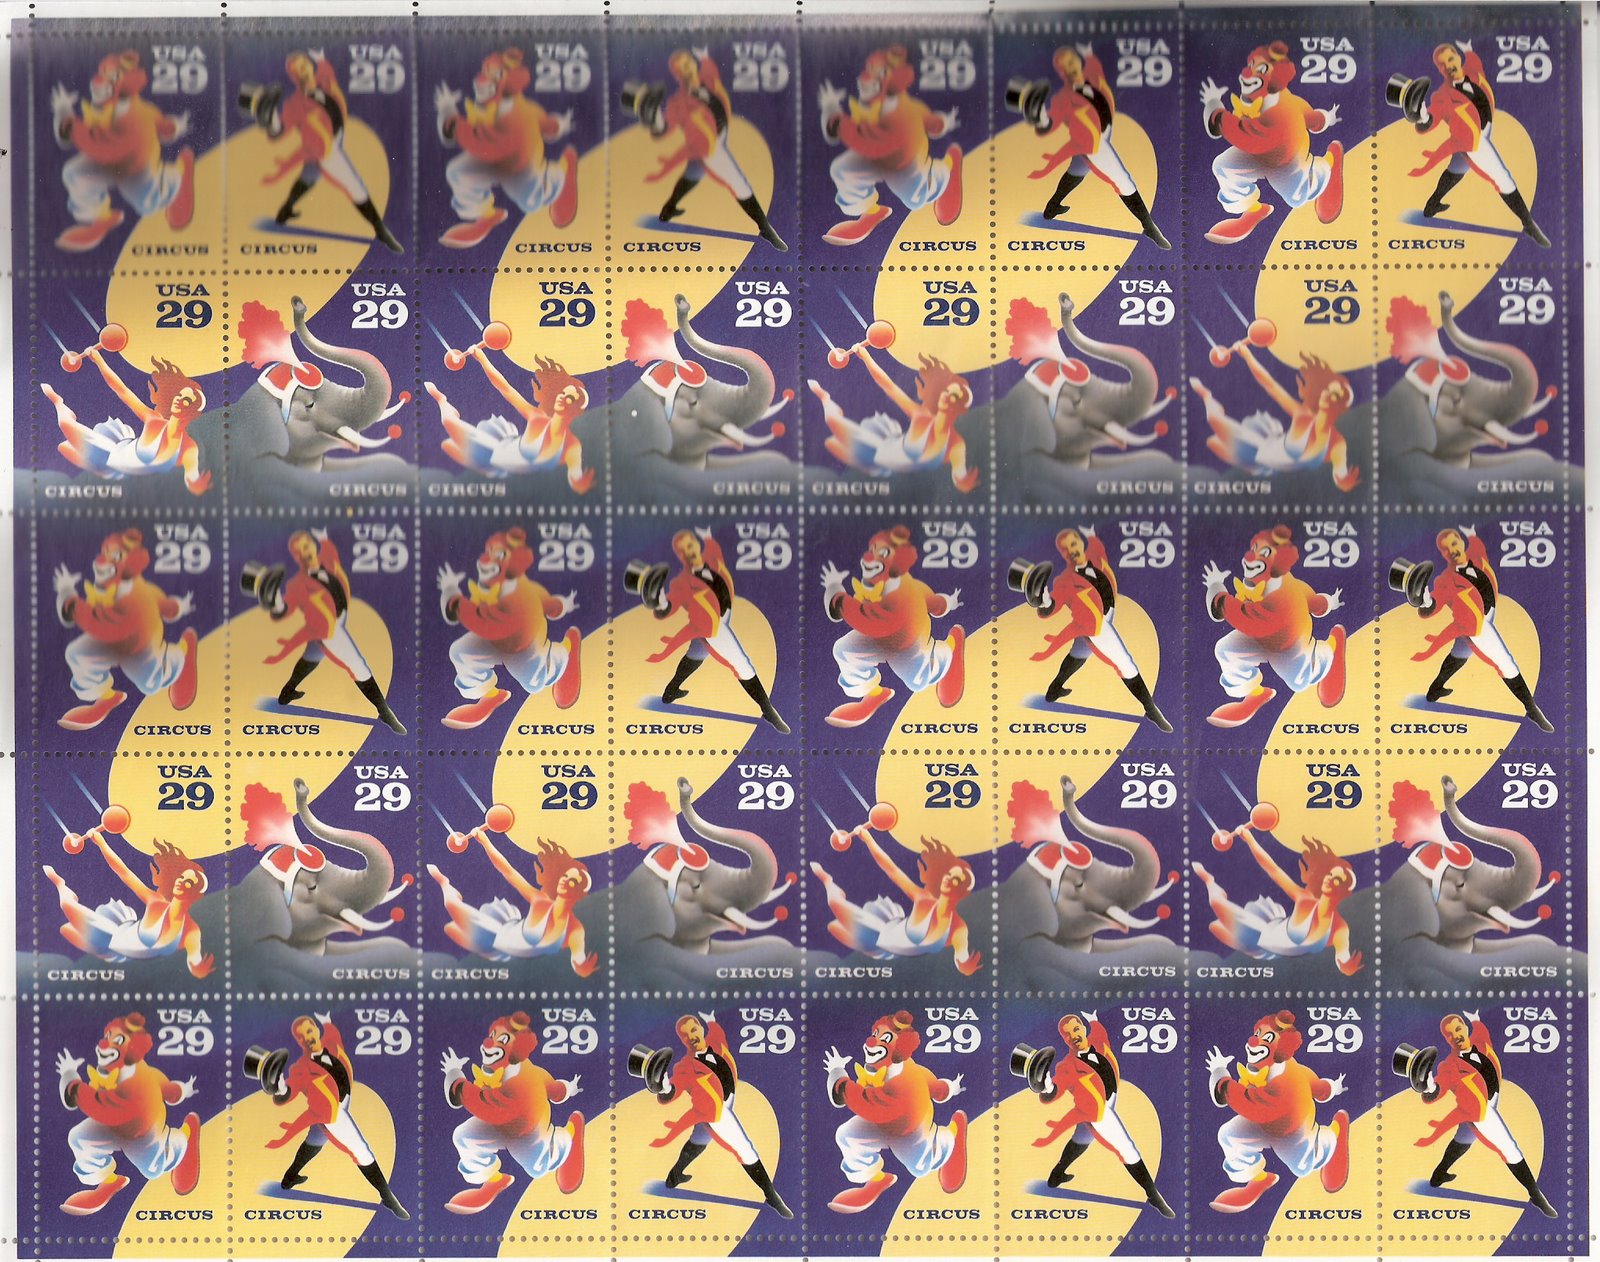 [Circus+Postage+Stamps.jpg]